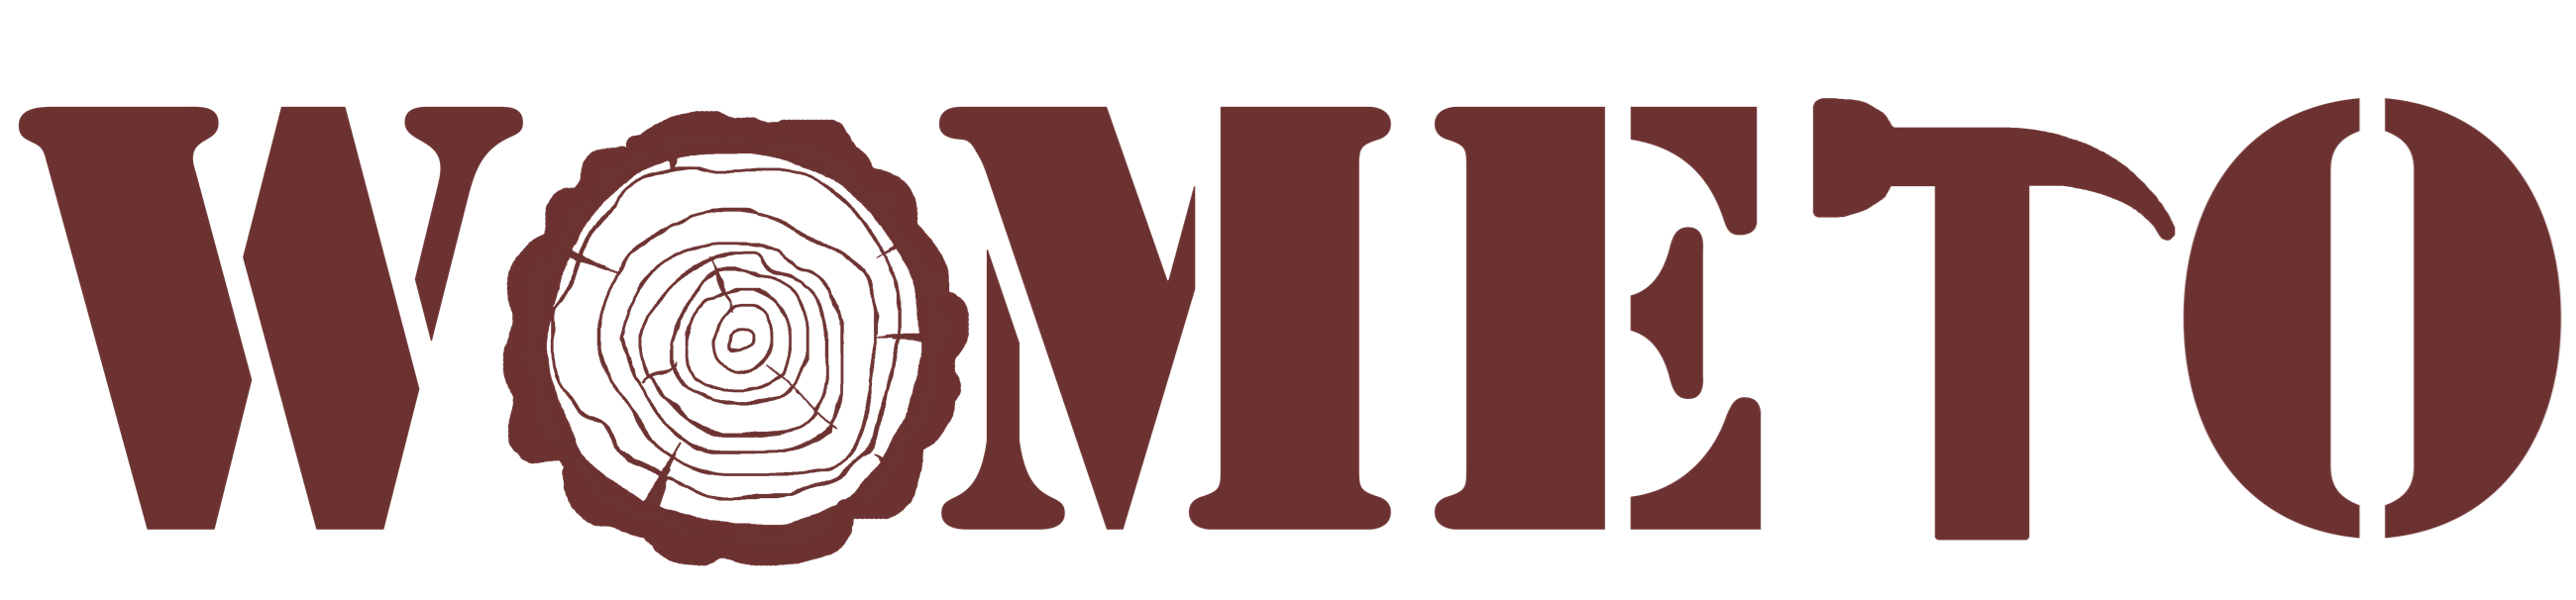 cropped-wometo-logo